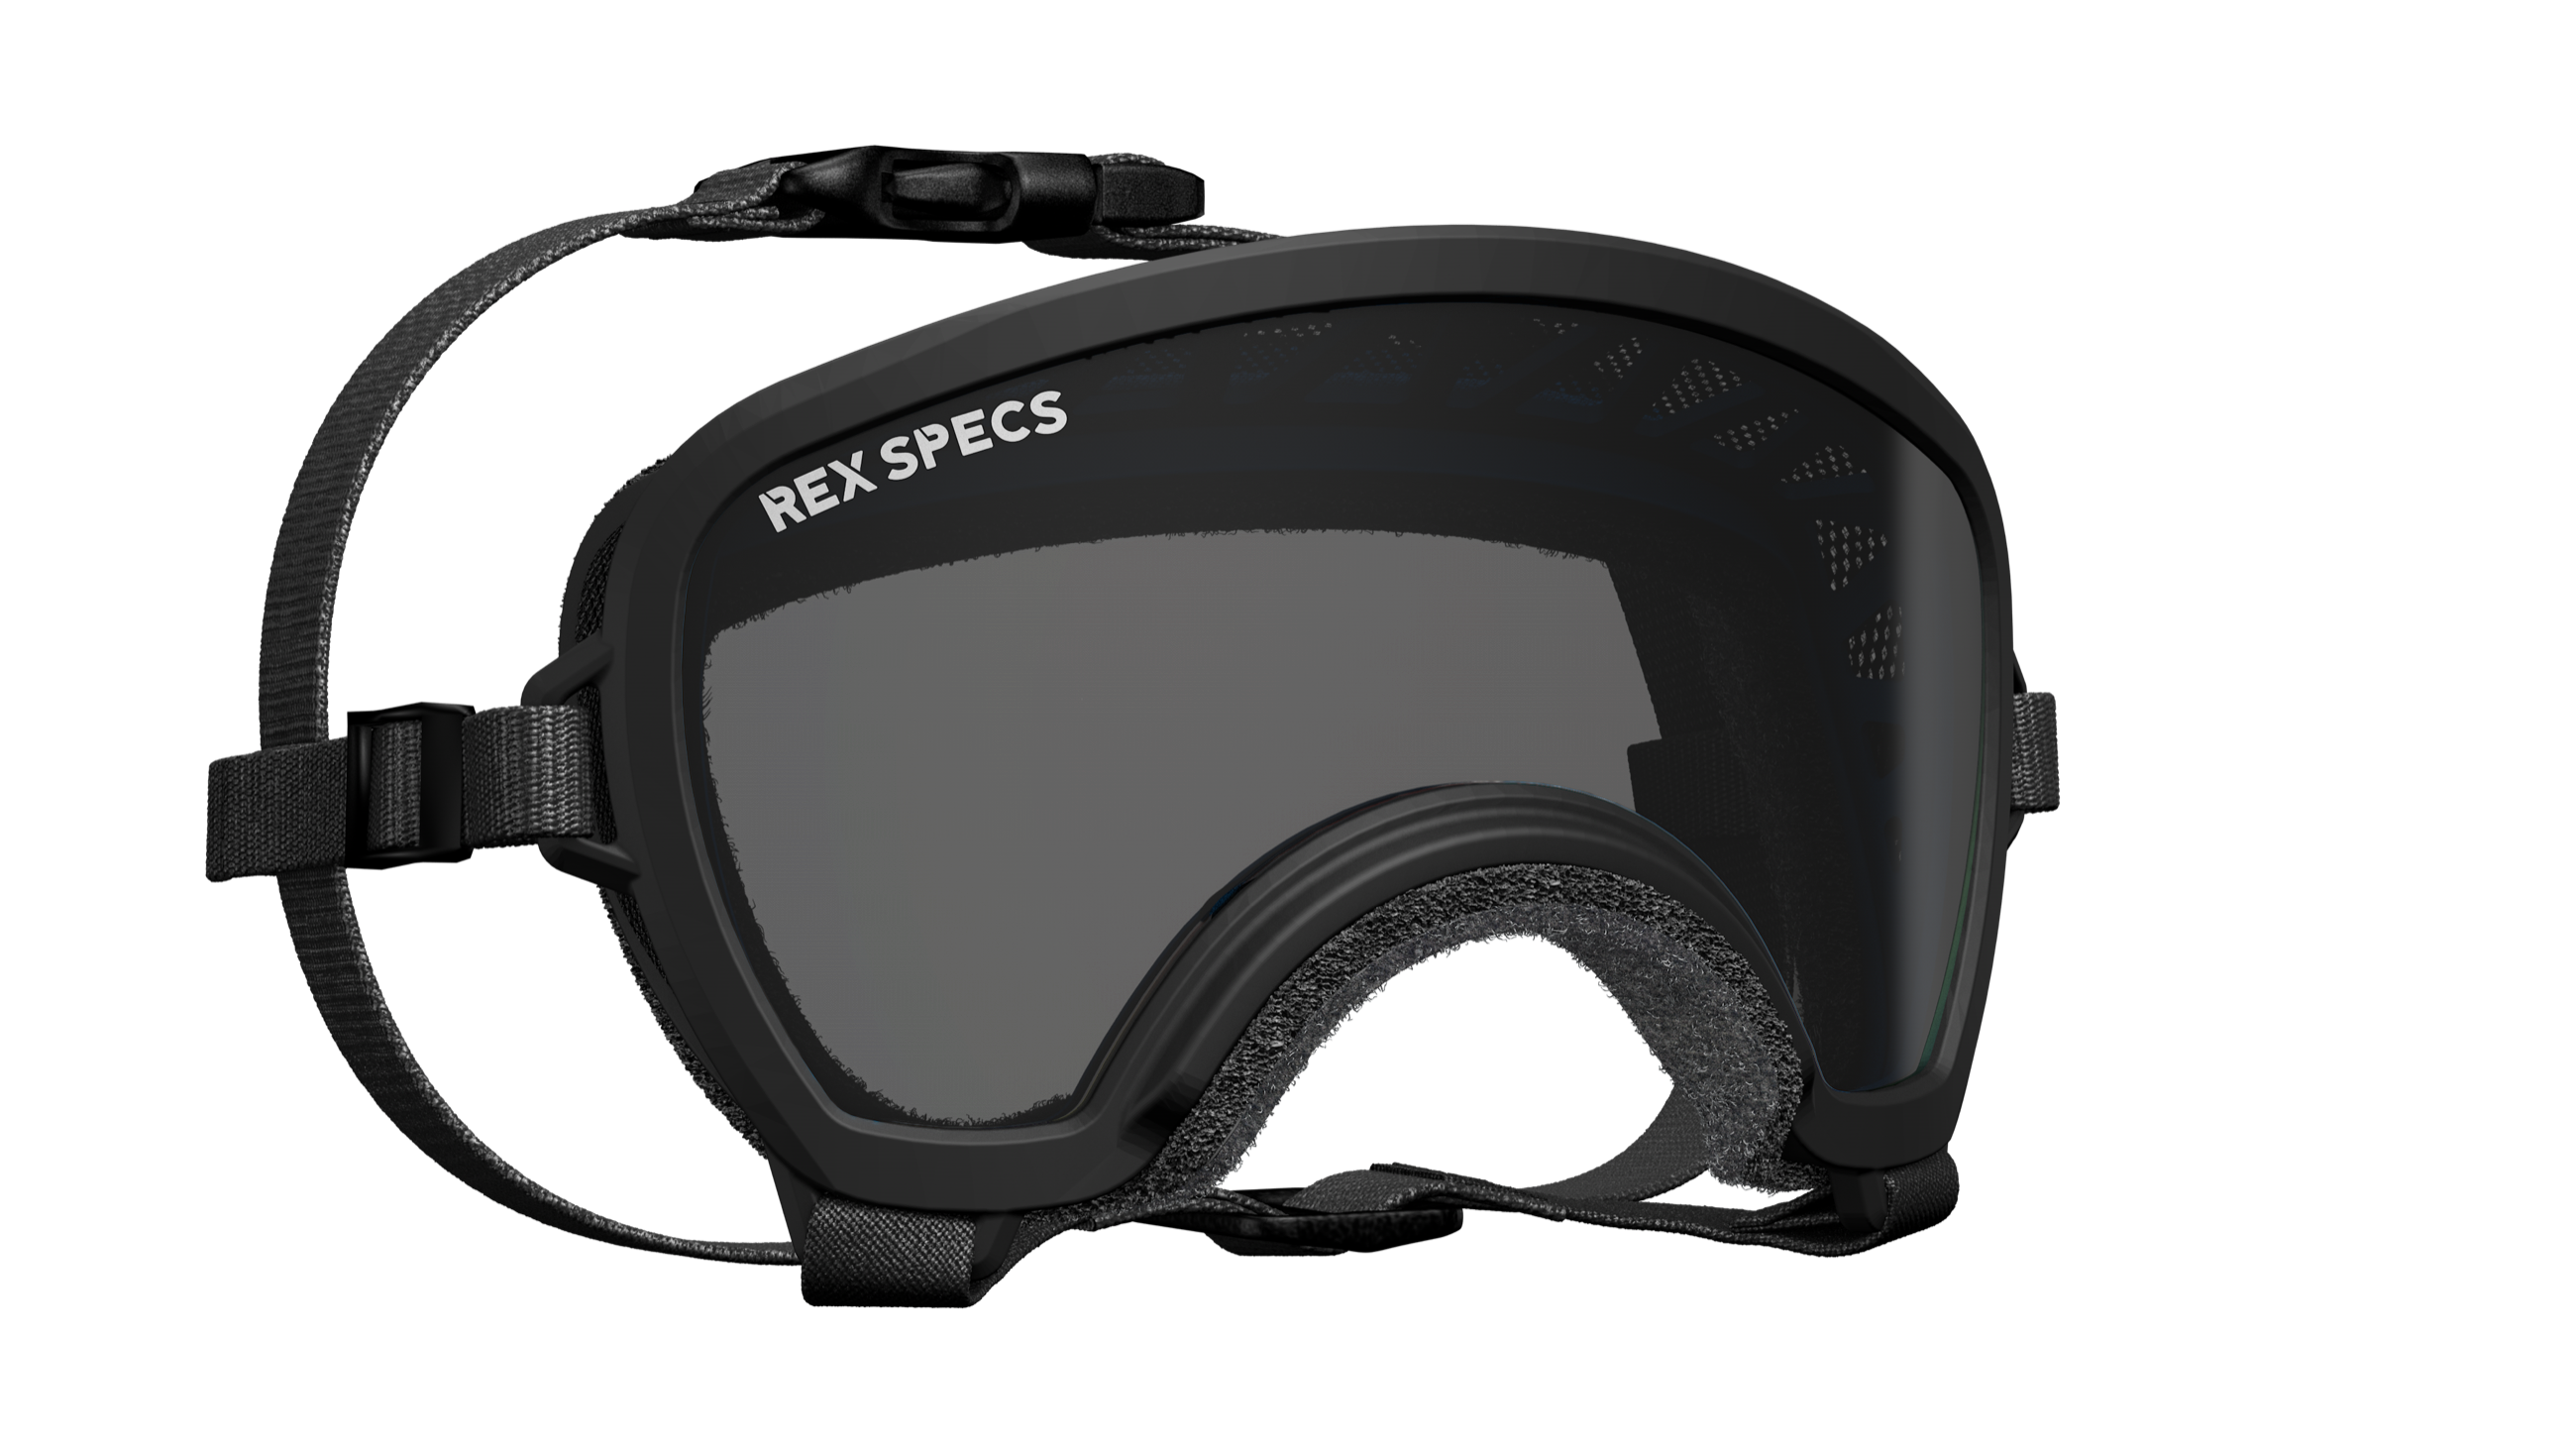 Goggles Lentes Para Perros Chicos Anchos de 6.5 a 12 kg de Rex Specs®